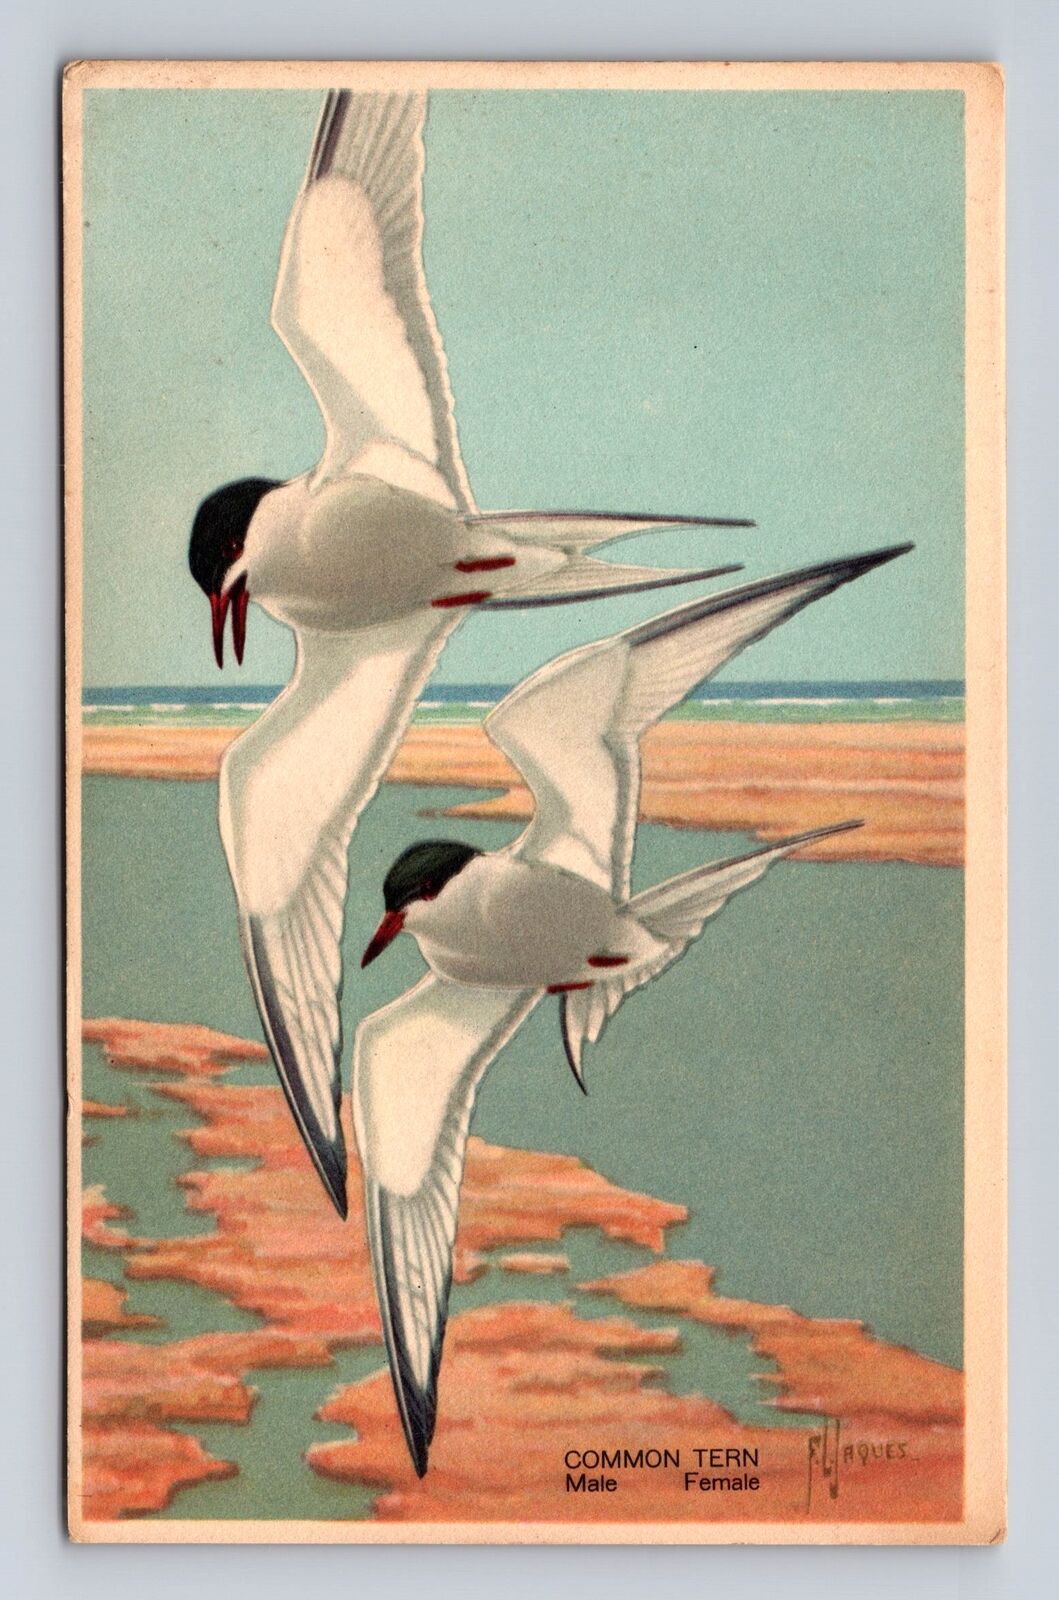 Common Tern, Birds, Animals, Antique, Vintage Souvenir Postcard